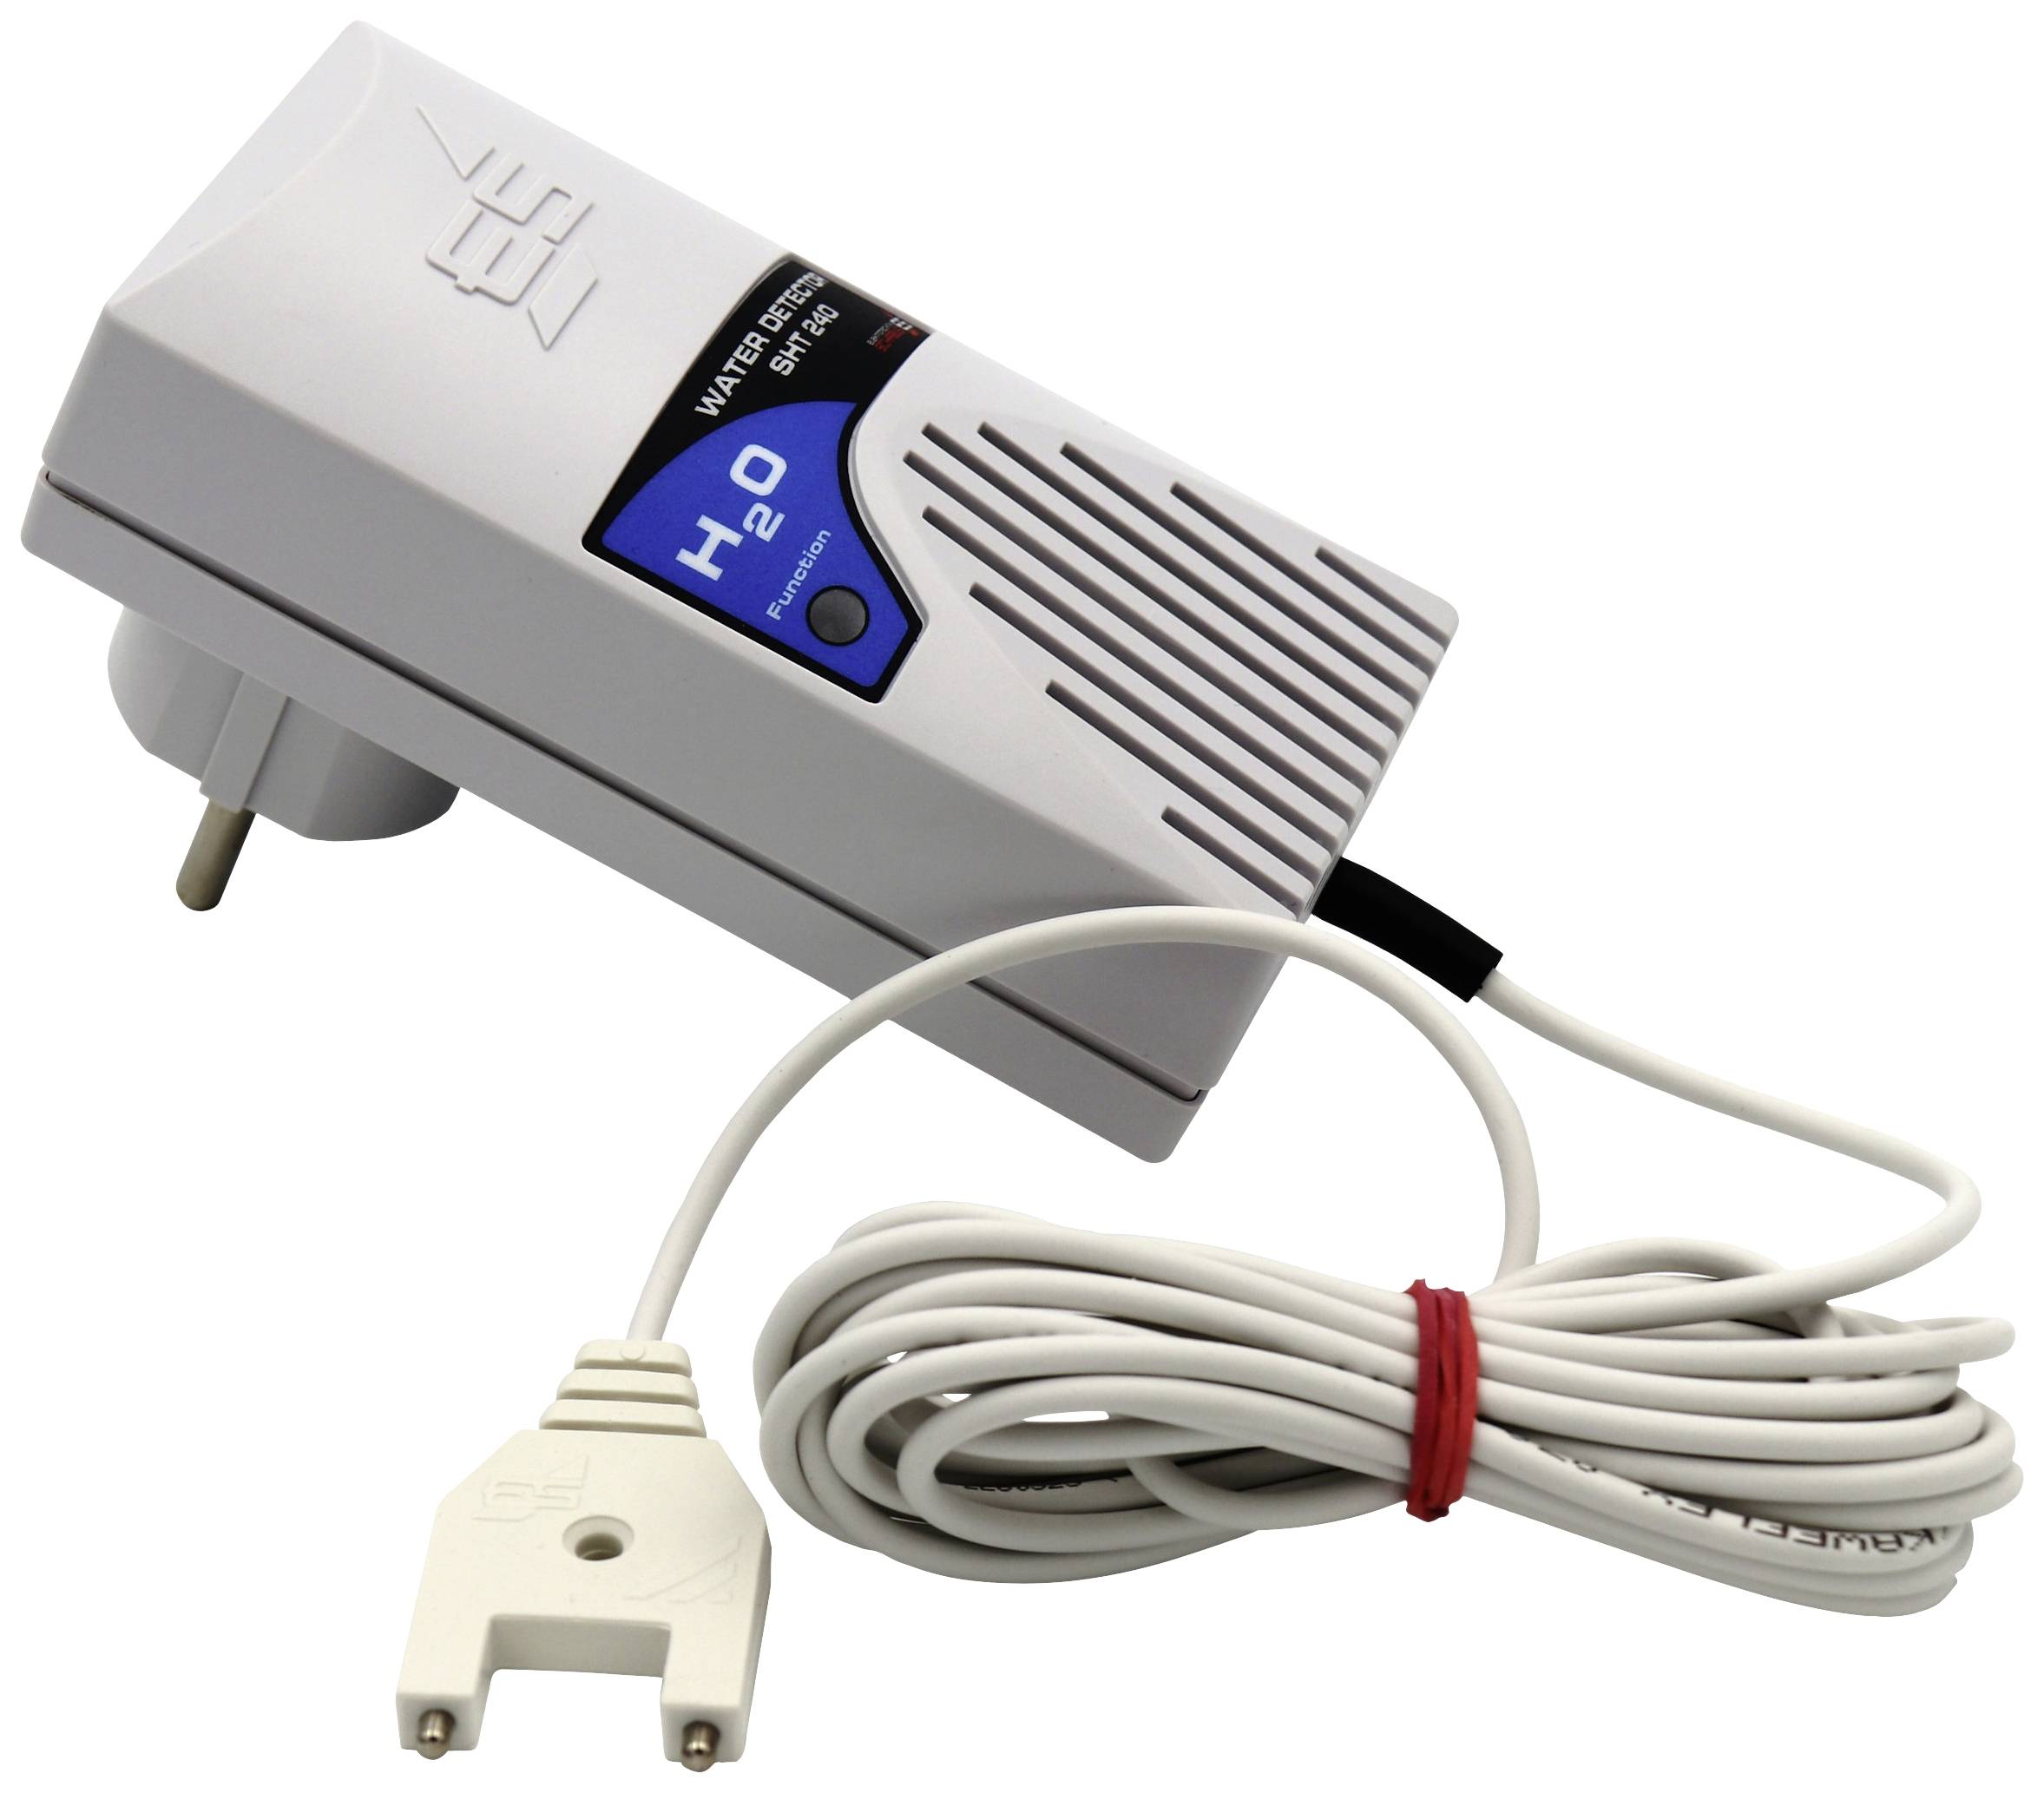 ELEKTROTECHNIK SCHABUS 300240 Wassermelder mit externem Sensor netzbetrieben